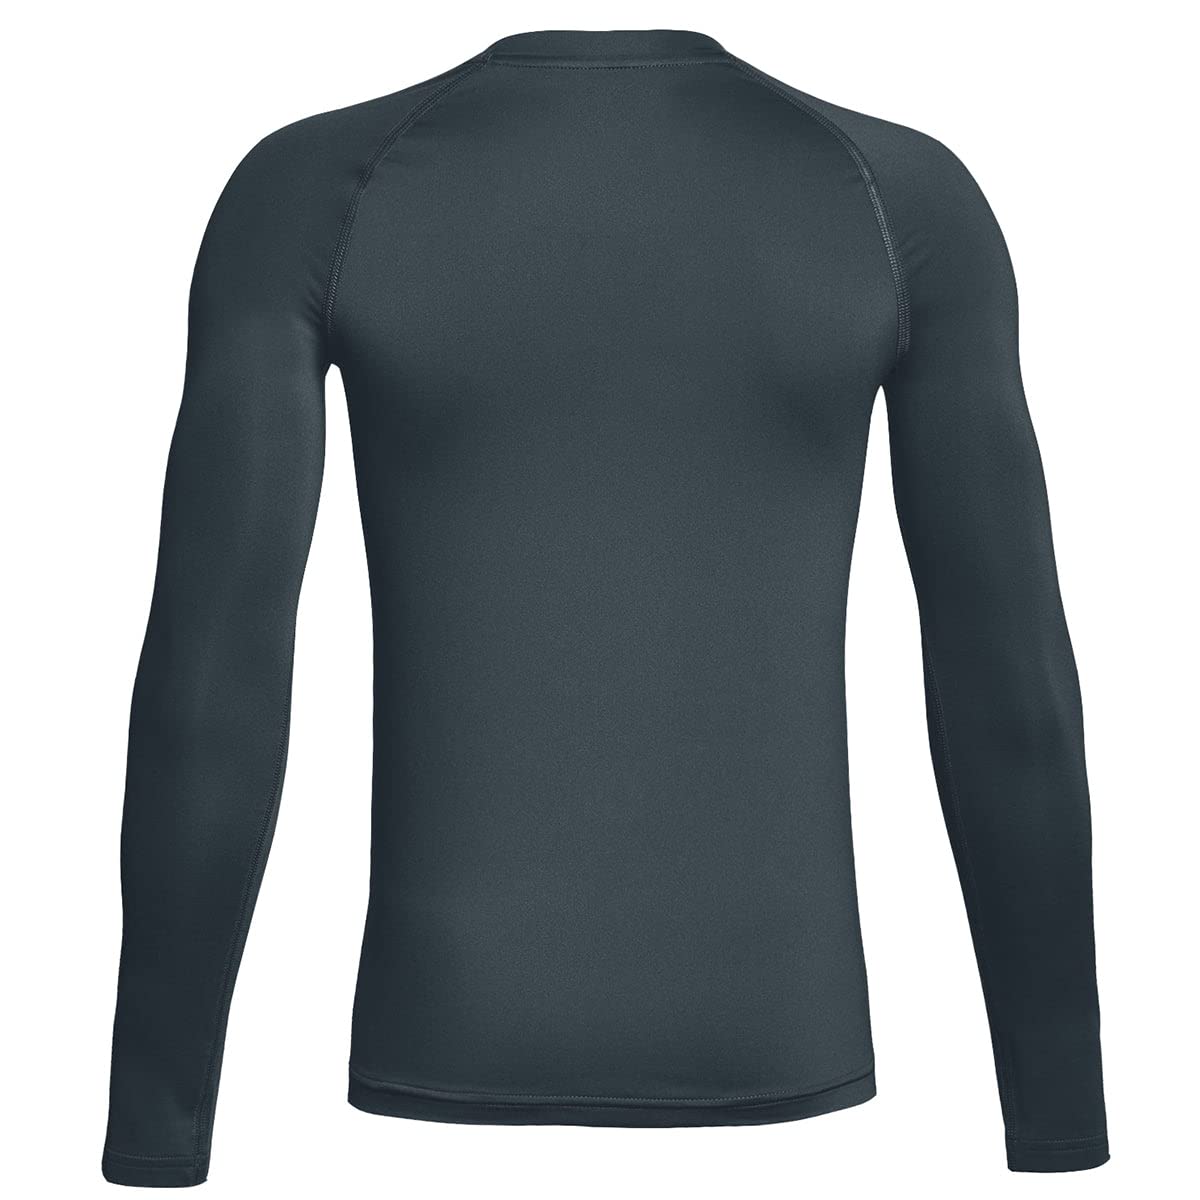 BALEAF Boys Long Sleeve Shirts Youth Compression Undershirts Kids Baseball Football Baselayer Cold Gear Quick Dry